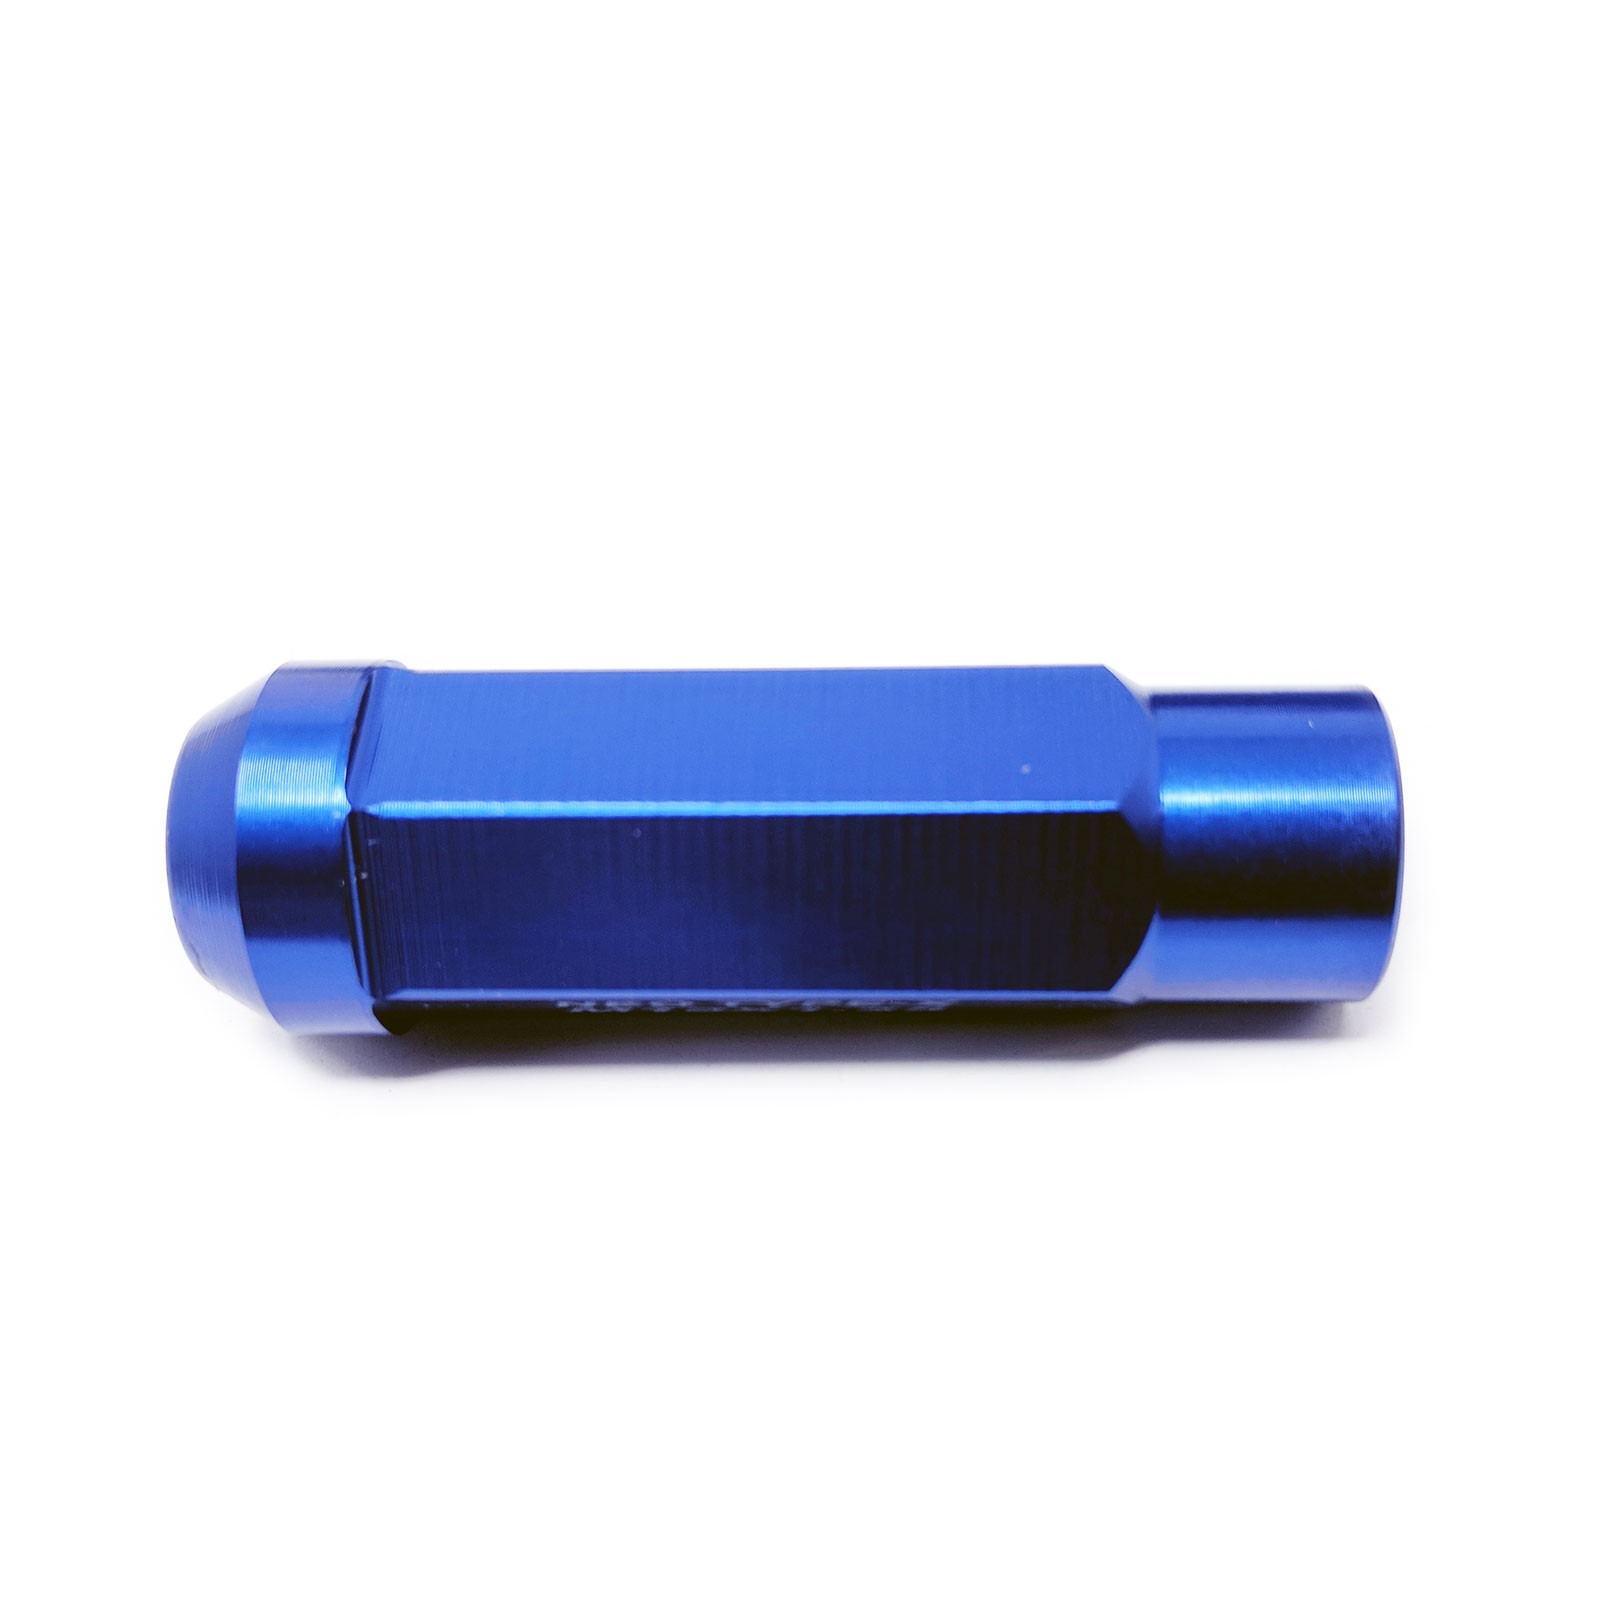 Godspeed 60mm Blue Type-X Aluminum Open Lug Nuts 20pcs M12x1.5 fits Acura TSX